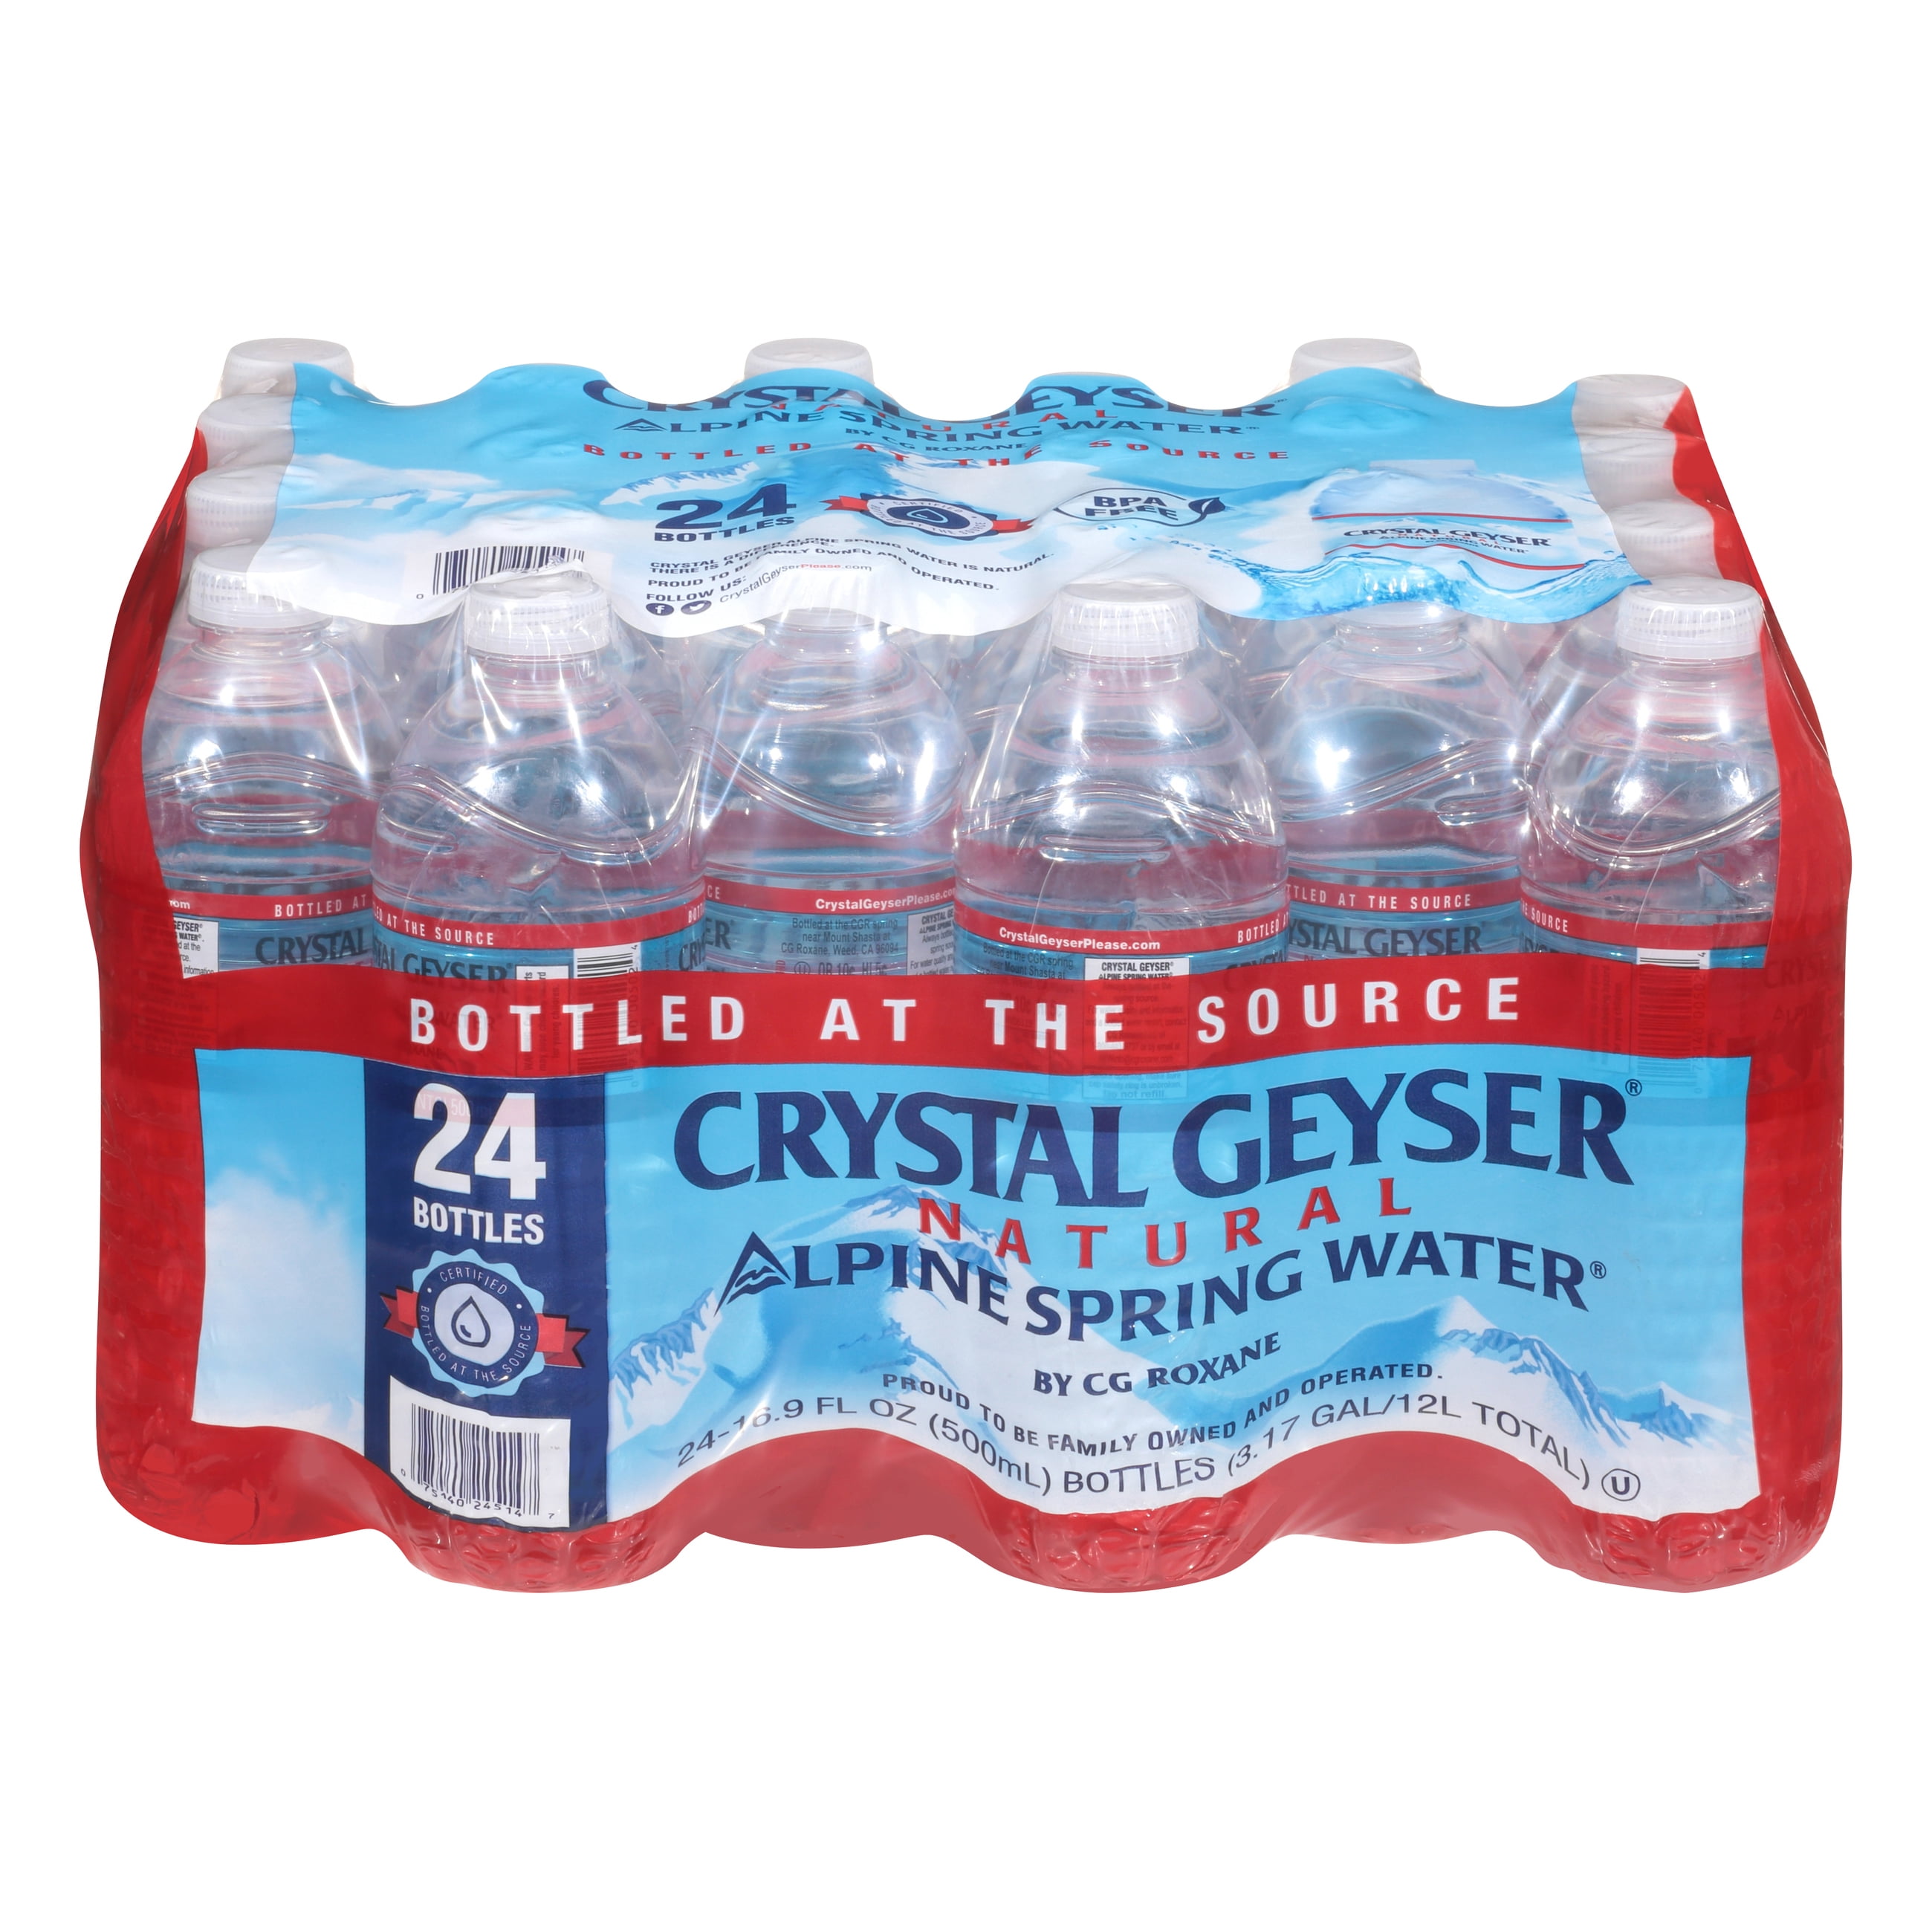 crystal-geyser-24-bottle-per-case-of-alpine-spring-water-16-9oz